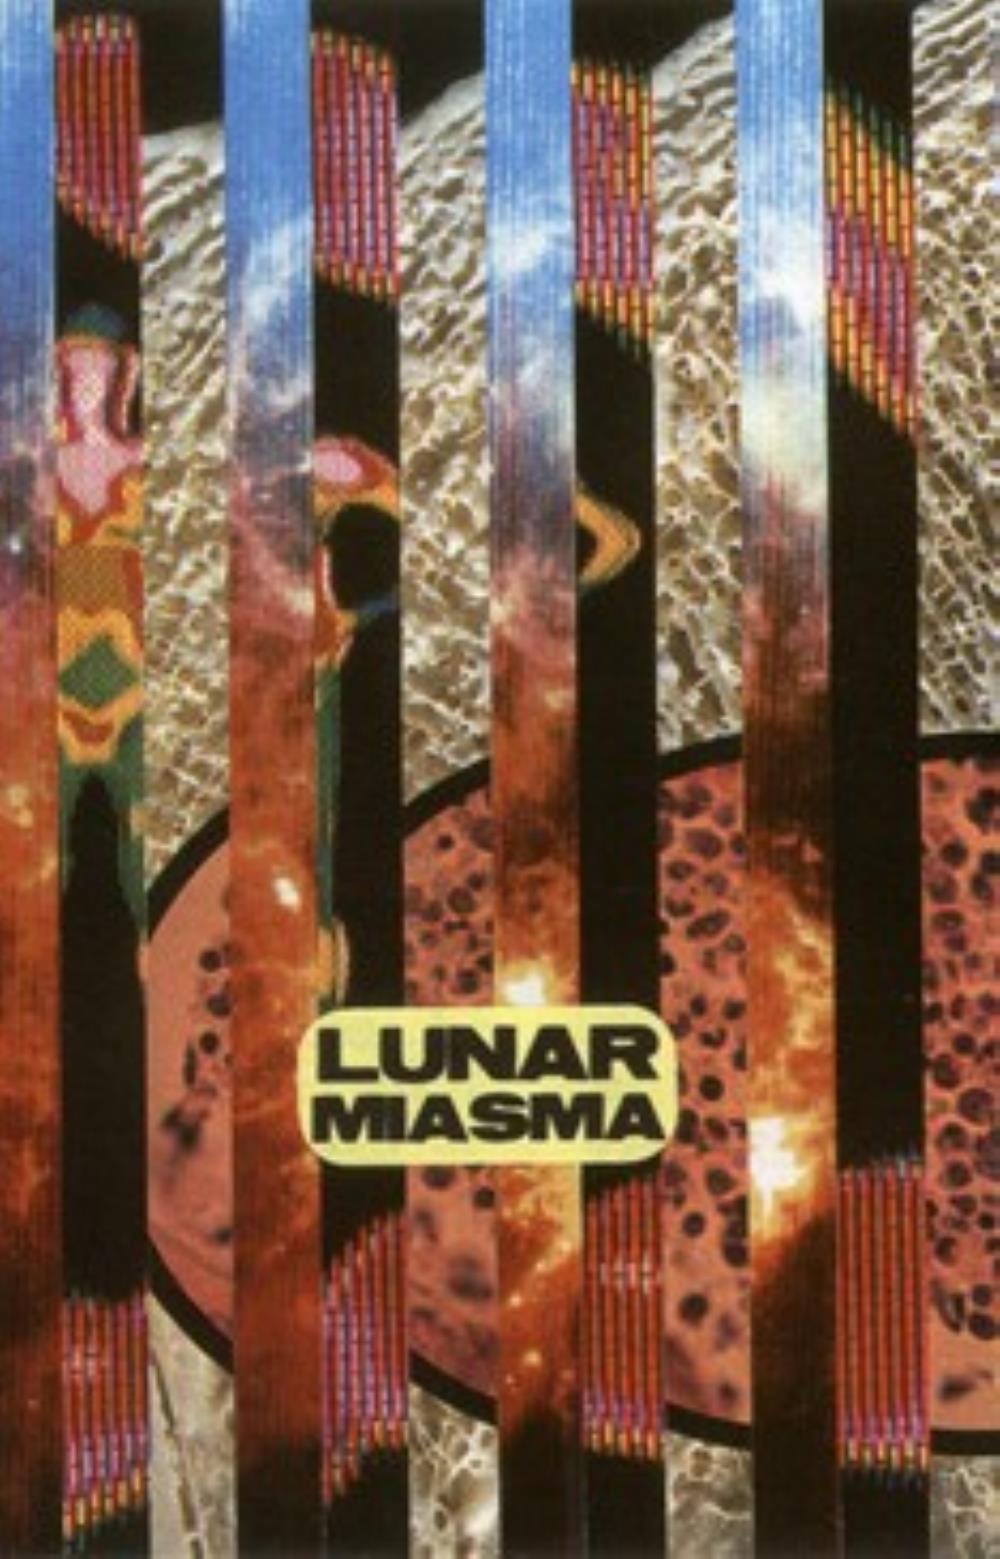 Lunar Miasma Three Legged Elephant album cover